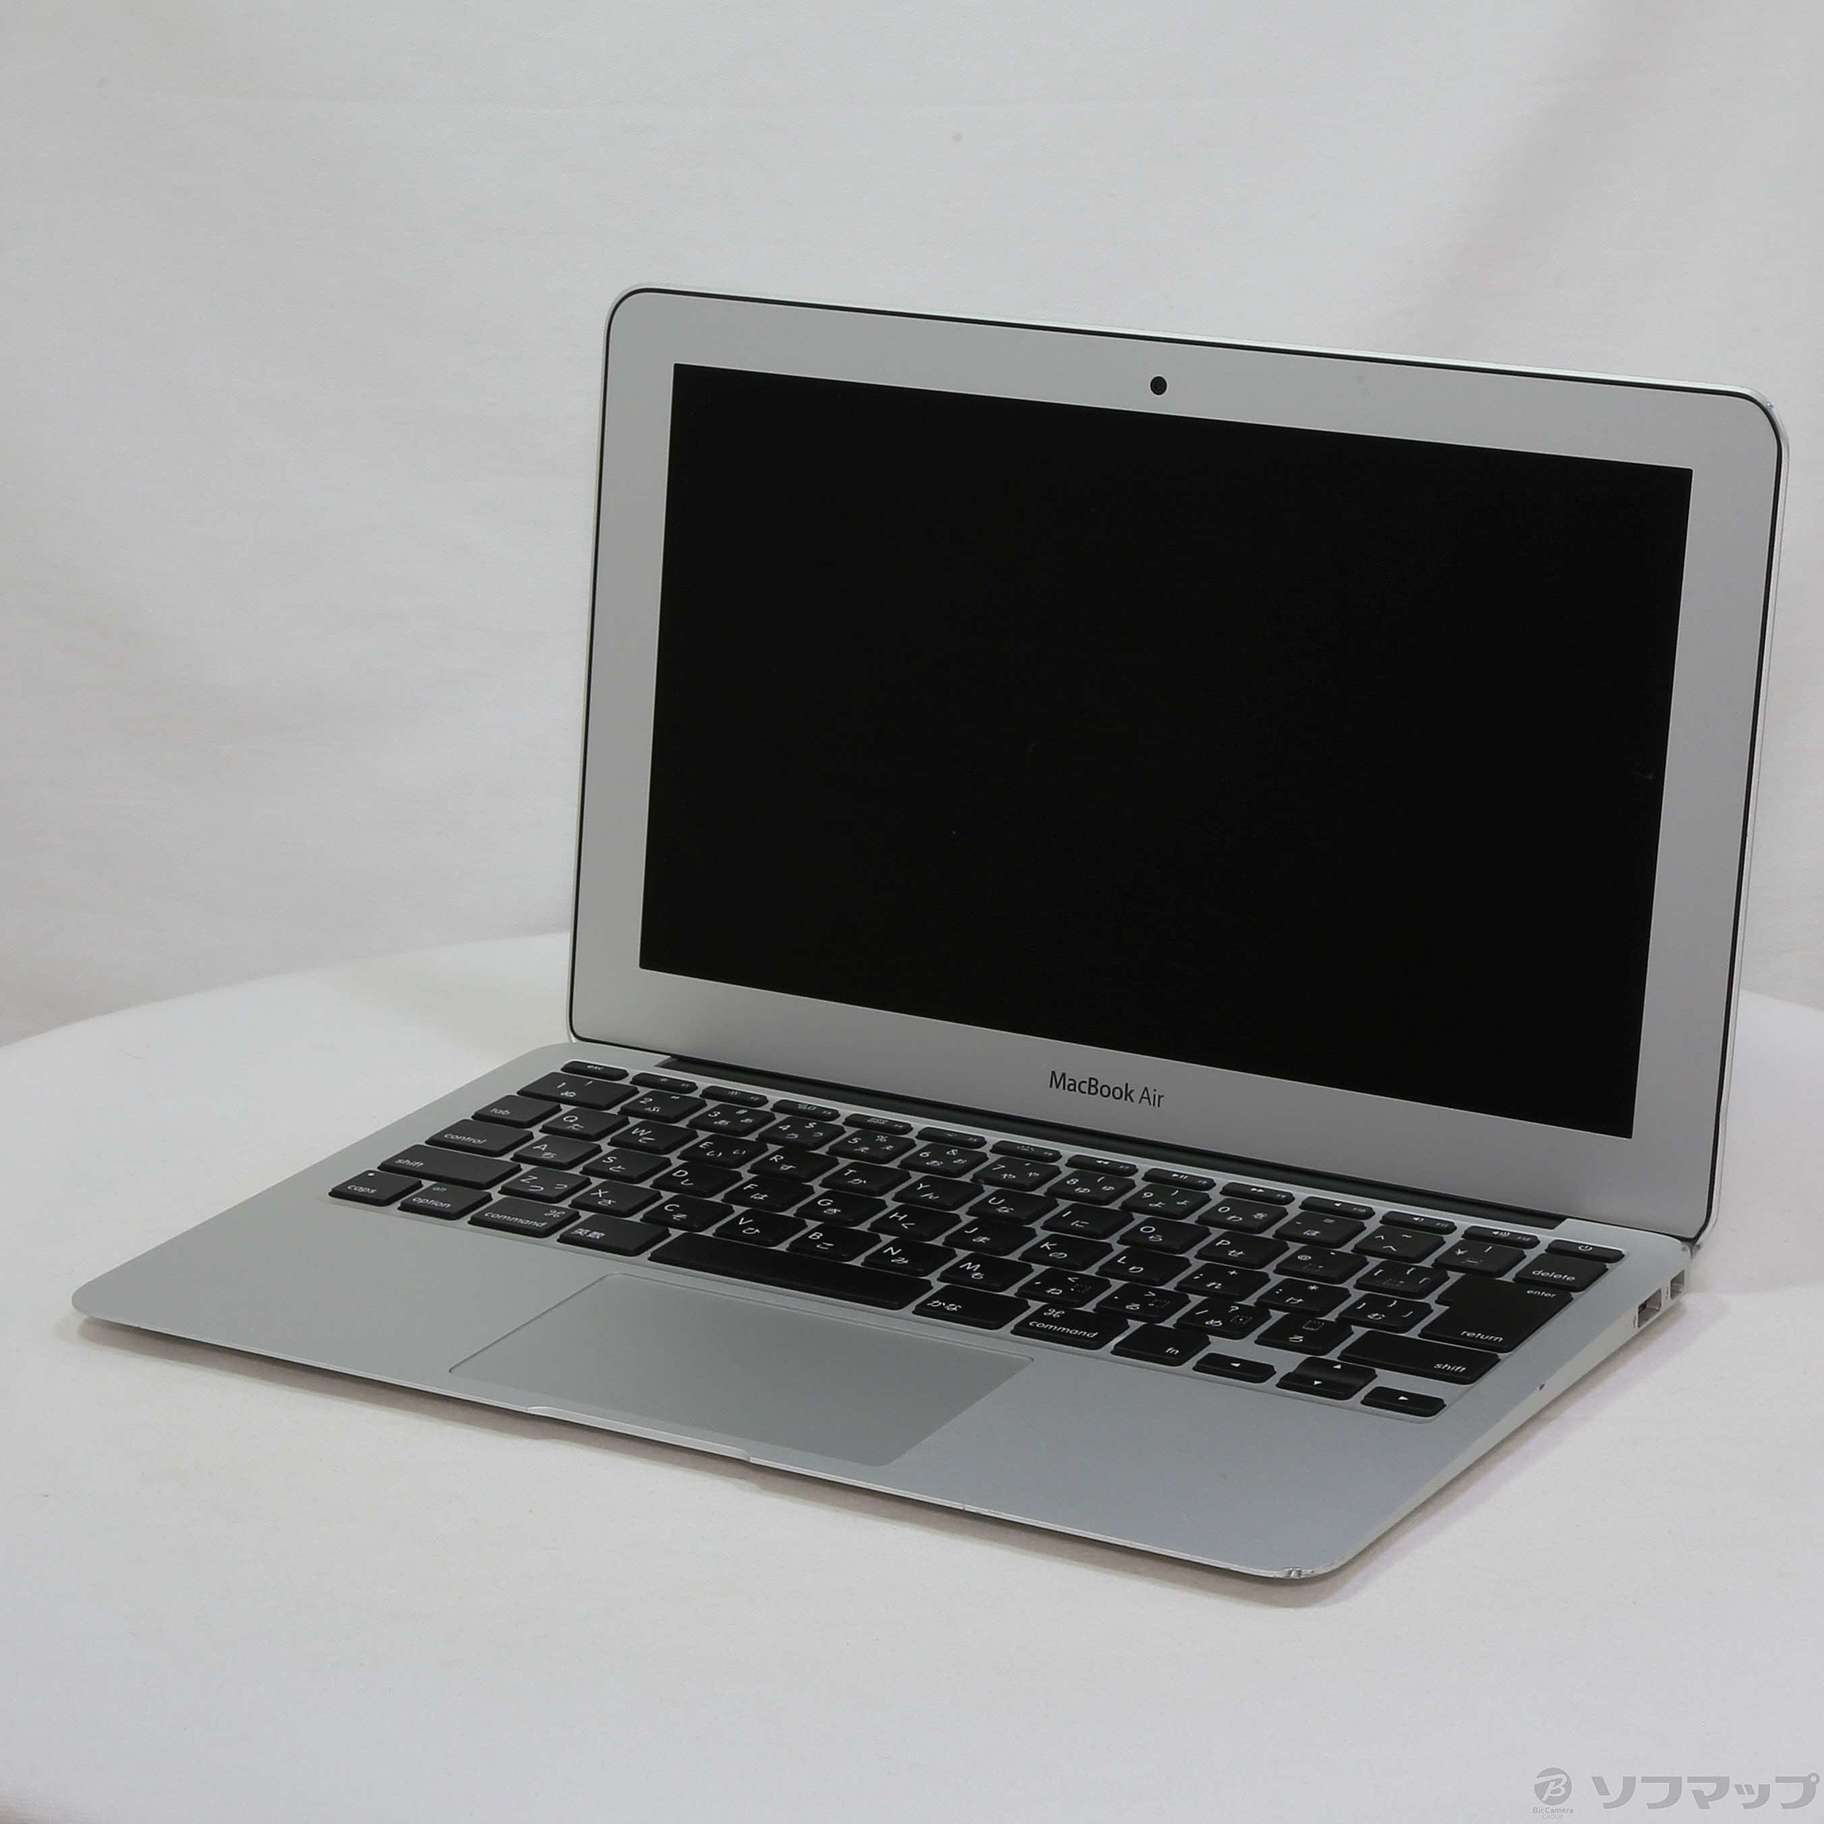 MacBook Air 11-inch,Mid 2013